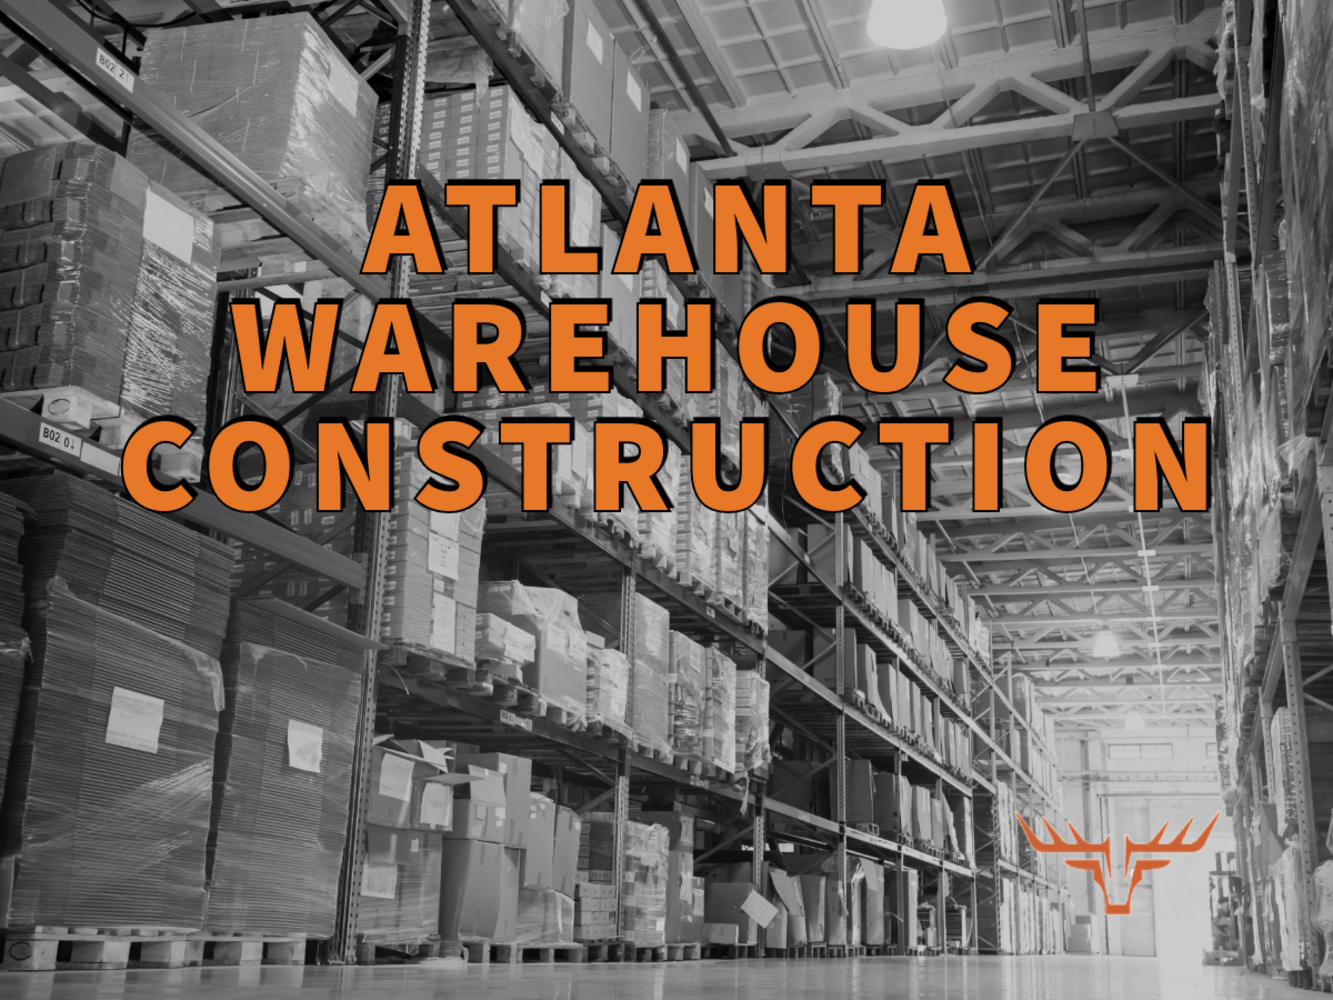 Atlanta warehouse construction written in orange over black and white image of stocked warehouse